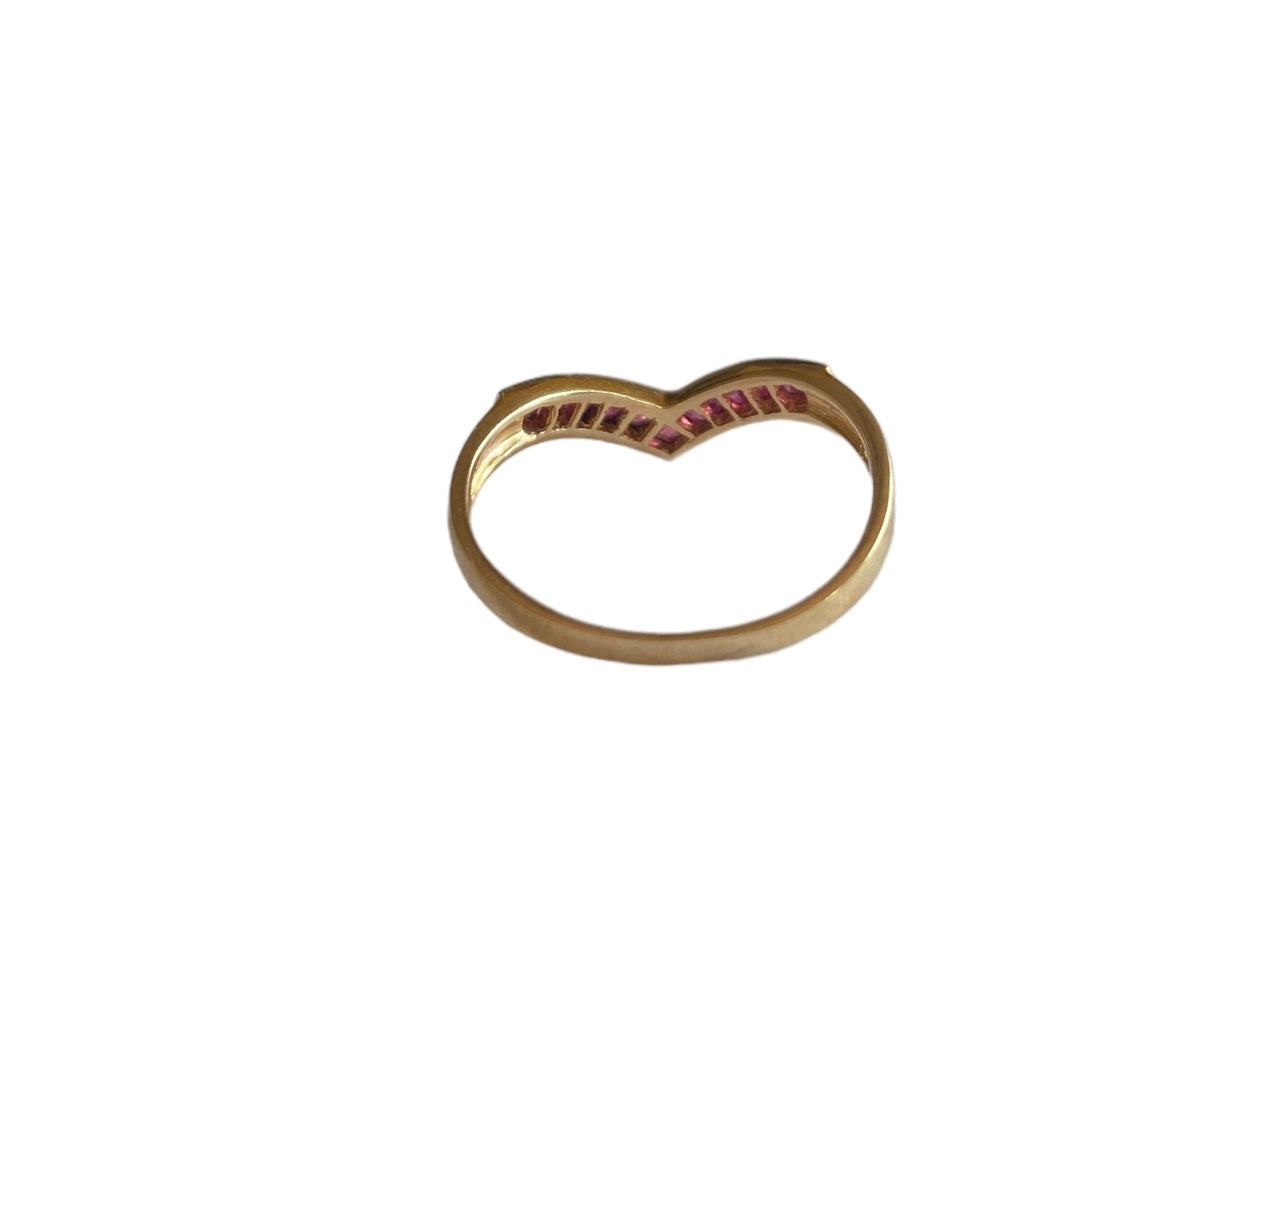 9ct vintage ruby wishbone ring size M